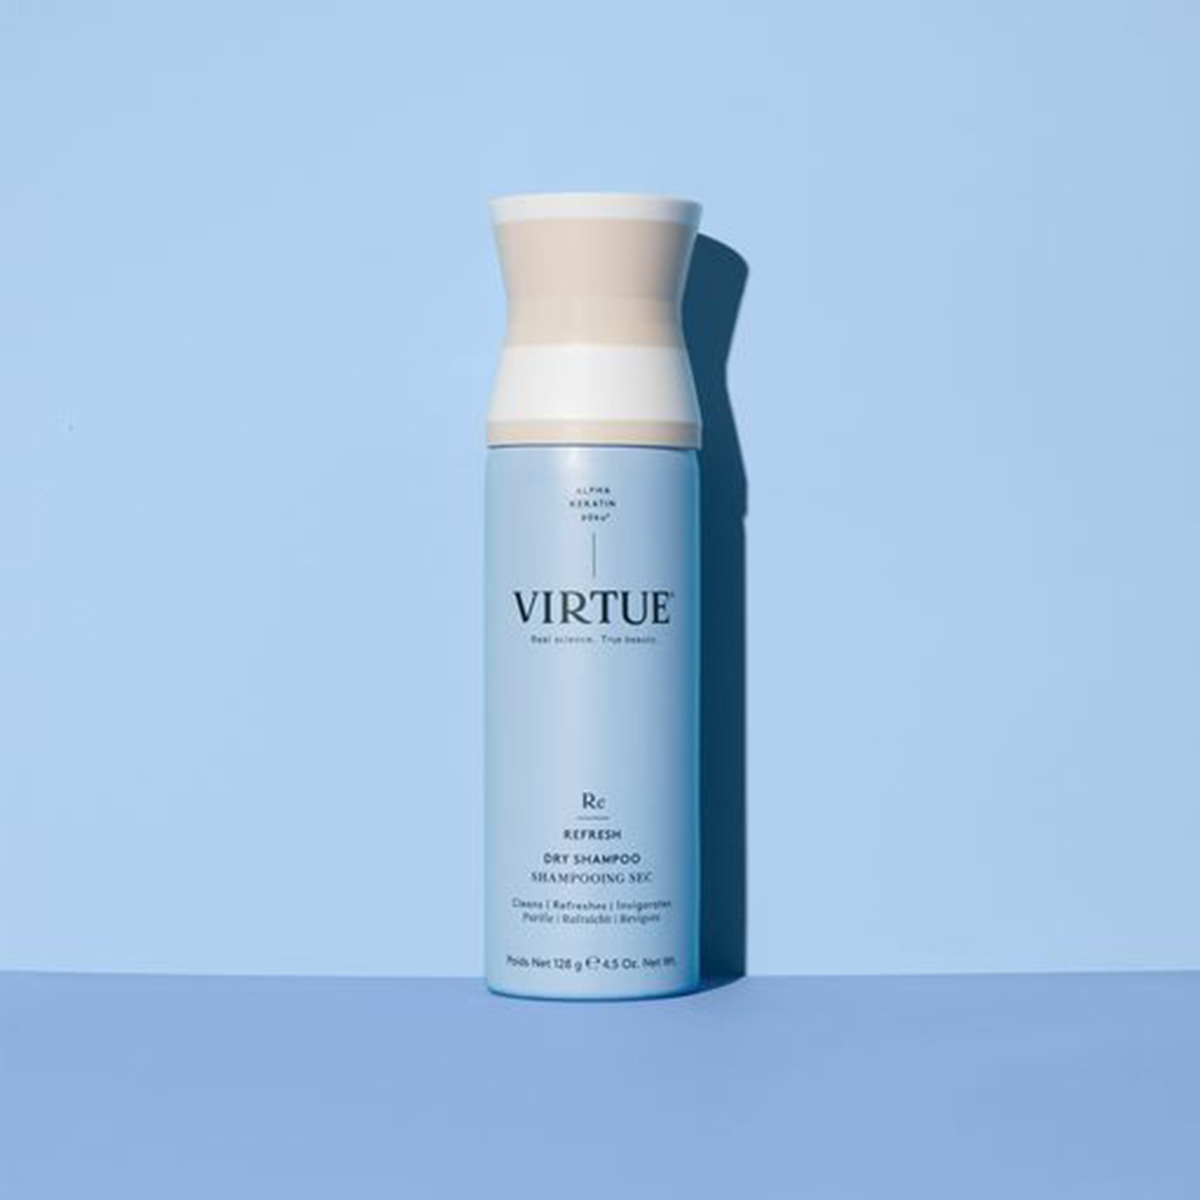 Virtue - Dry Shampoo